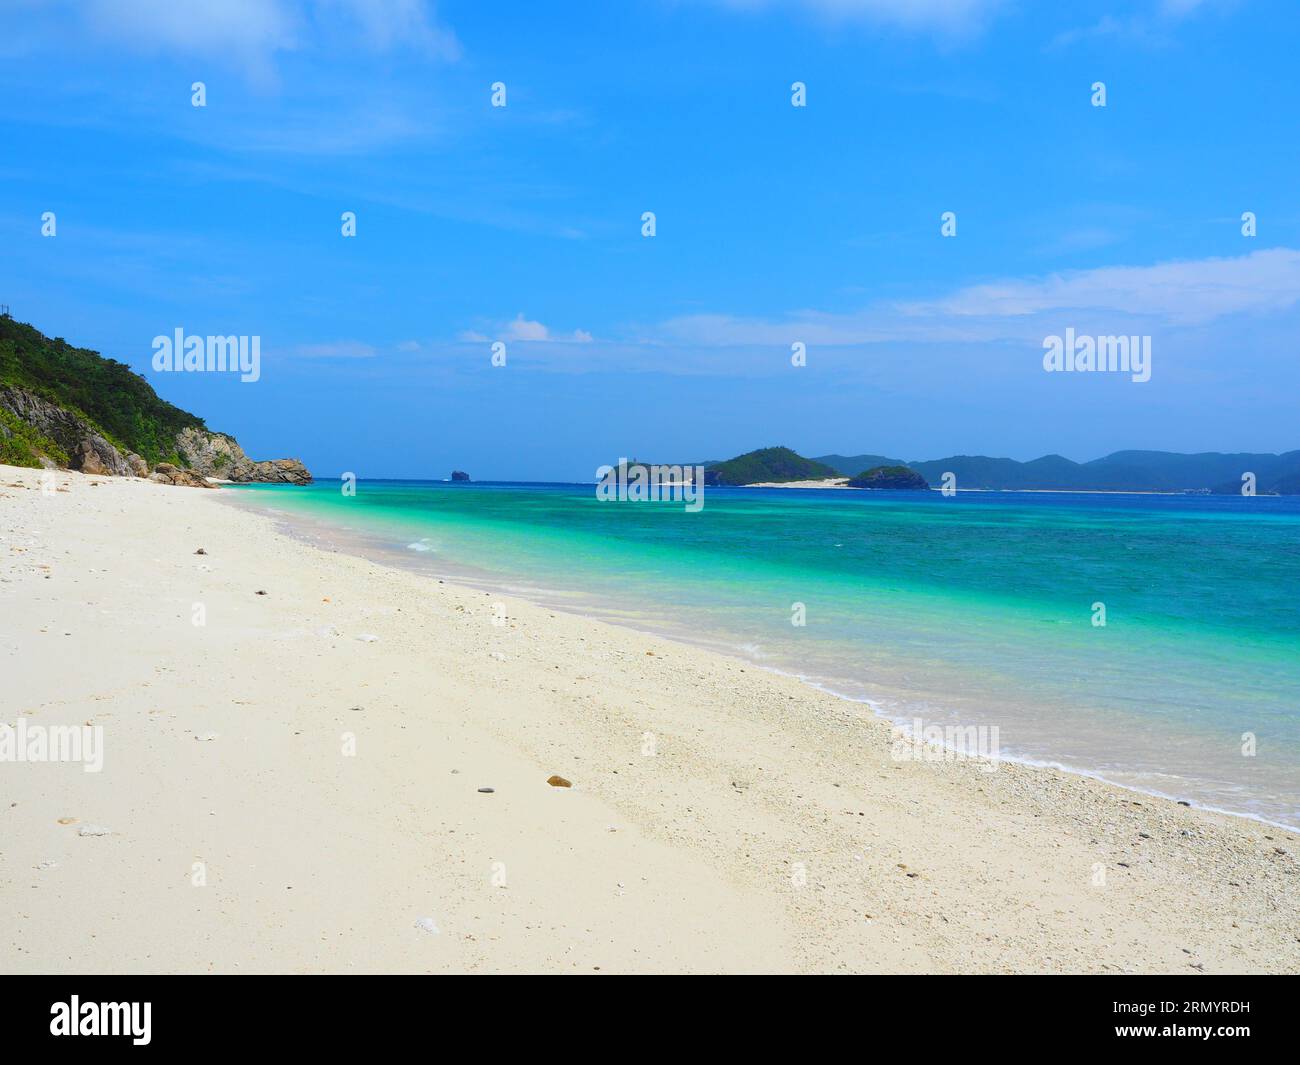 Kerama Islands, National Park, Okinawa, Japan - Blue Zones Stock Photo